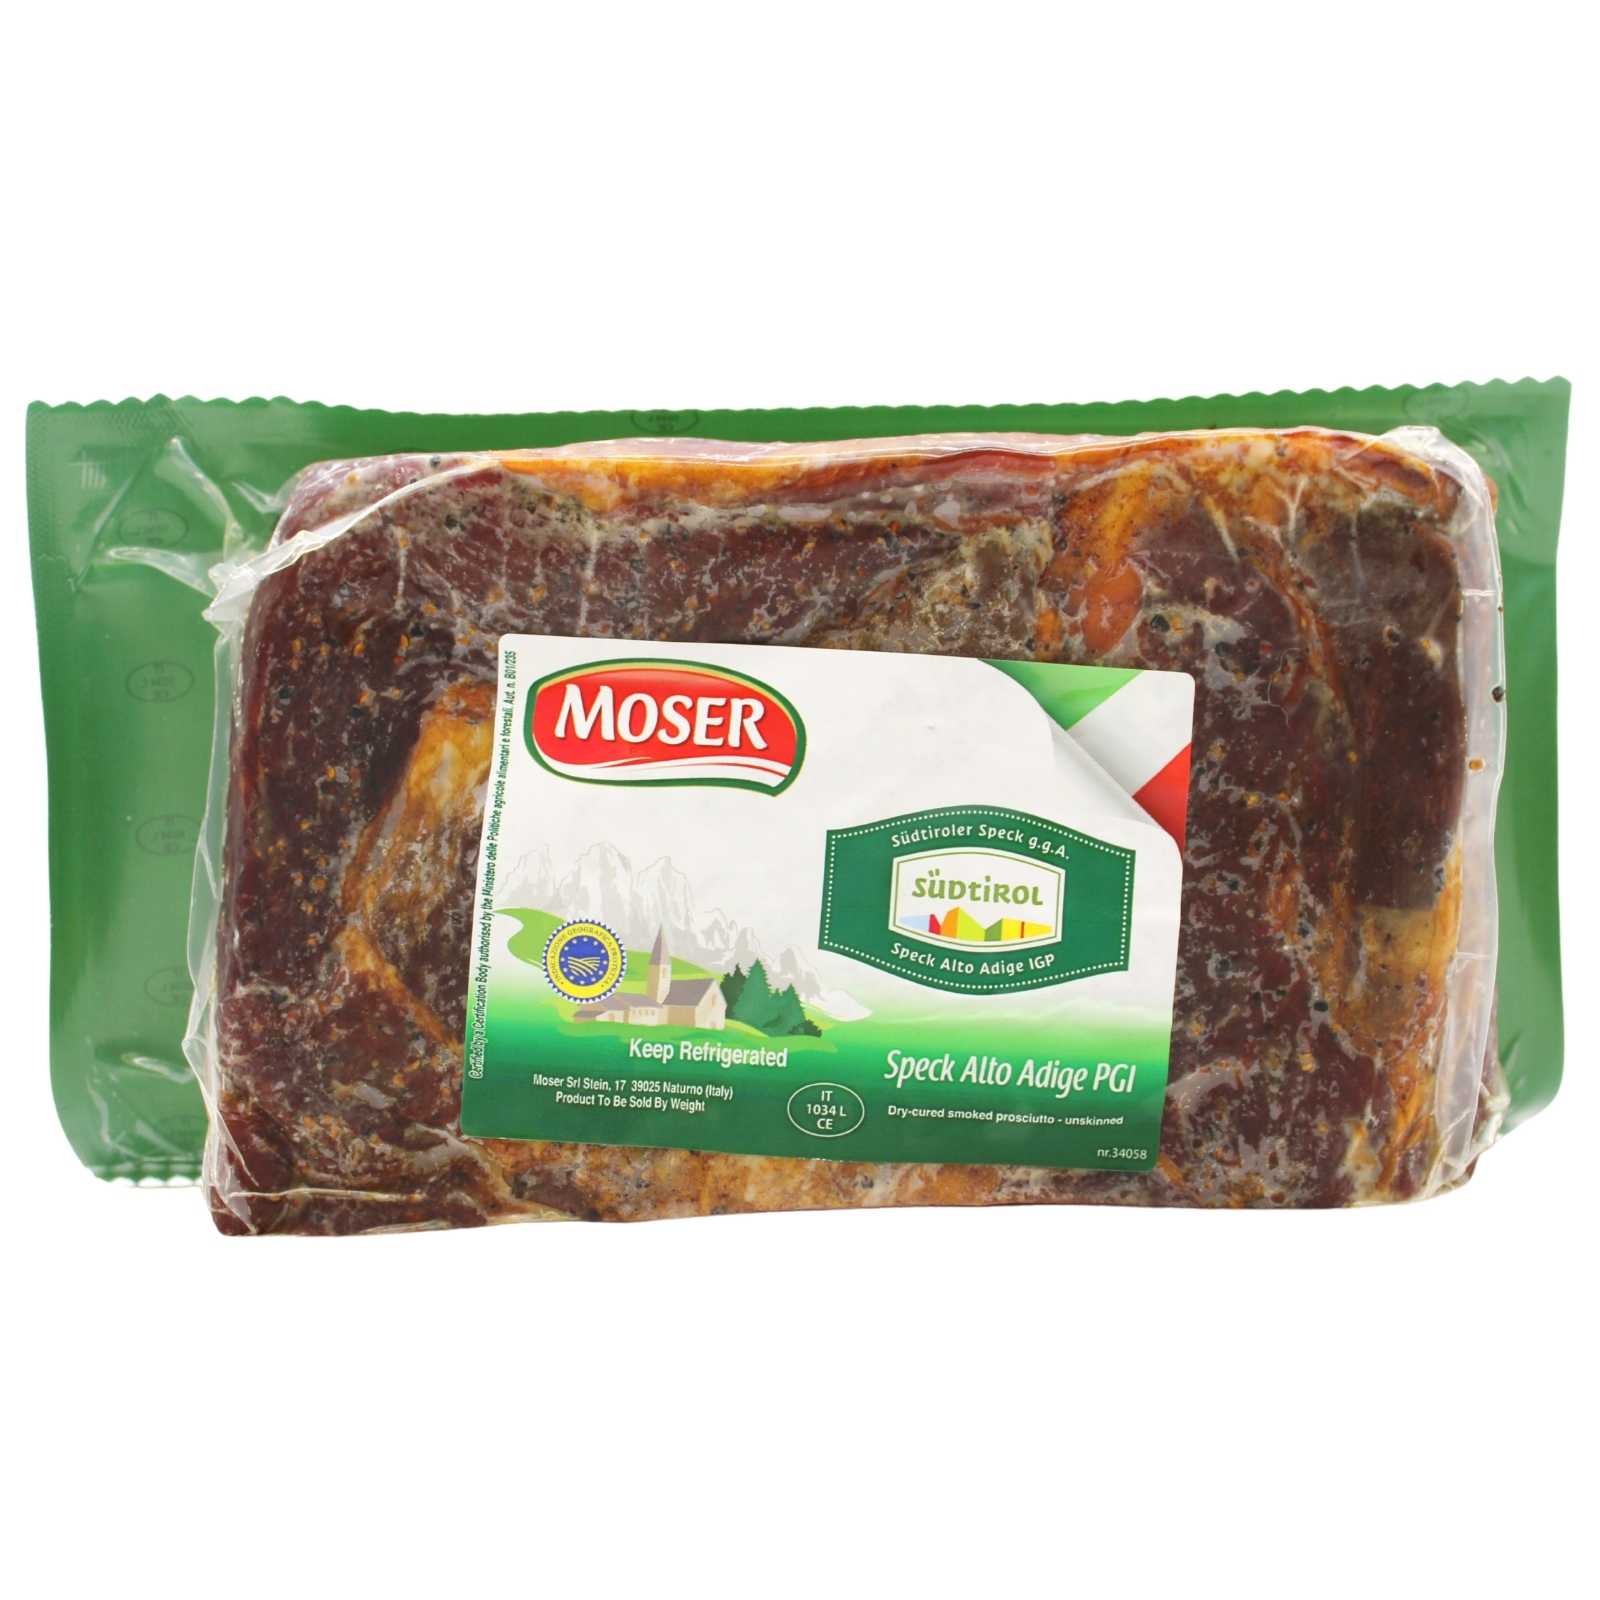 Speck Alto Adige PGI Smoked Food approx. Prosciutto Ham Wholesale - Cured | | – Italian Weight